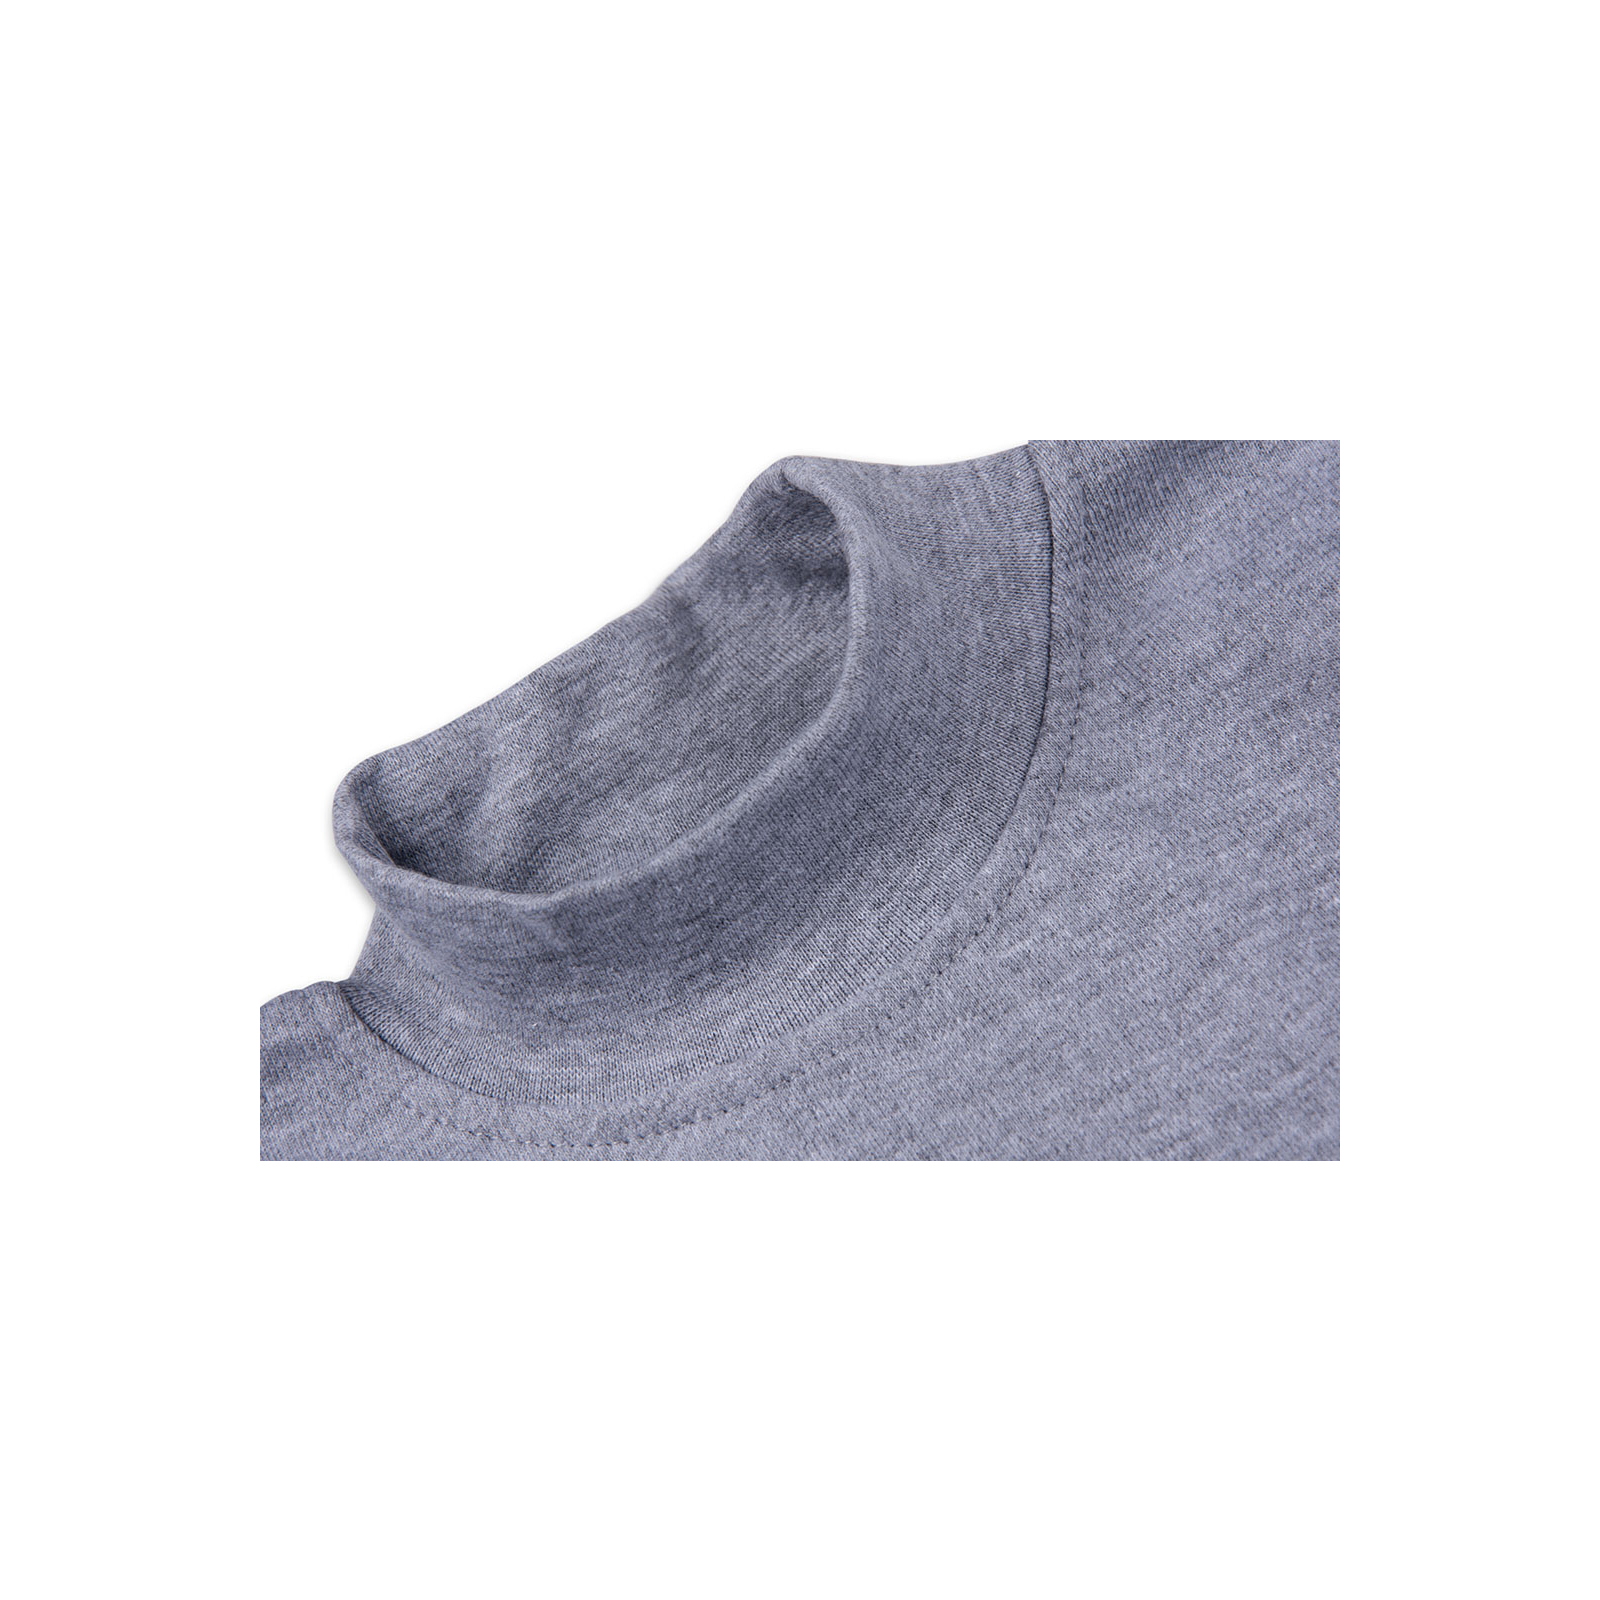 Кофта Lovetti водолазка серая меланжевая (1012-122-gray) изображение 3